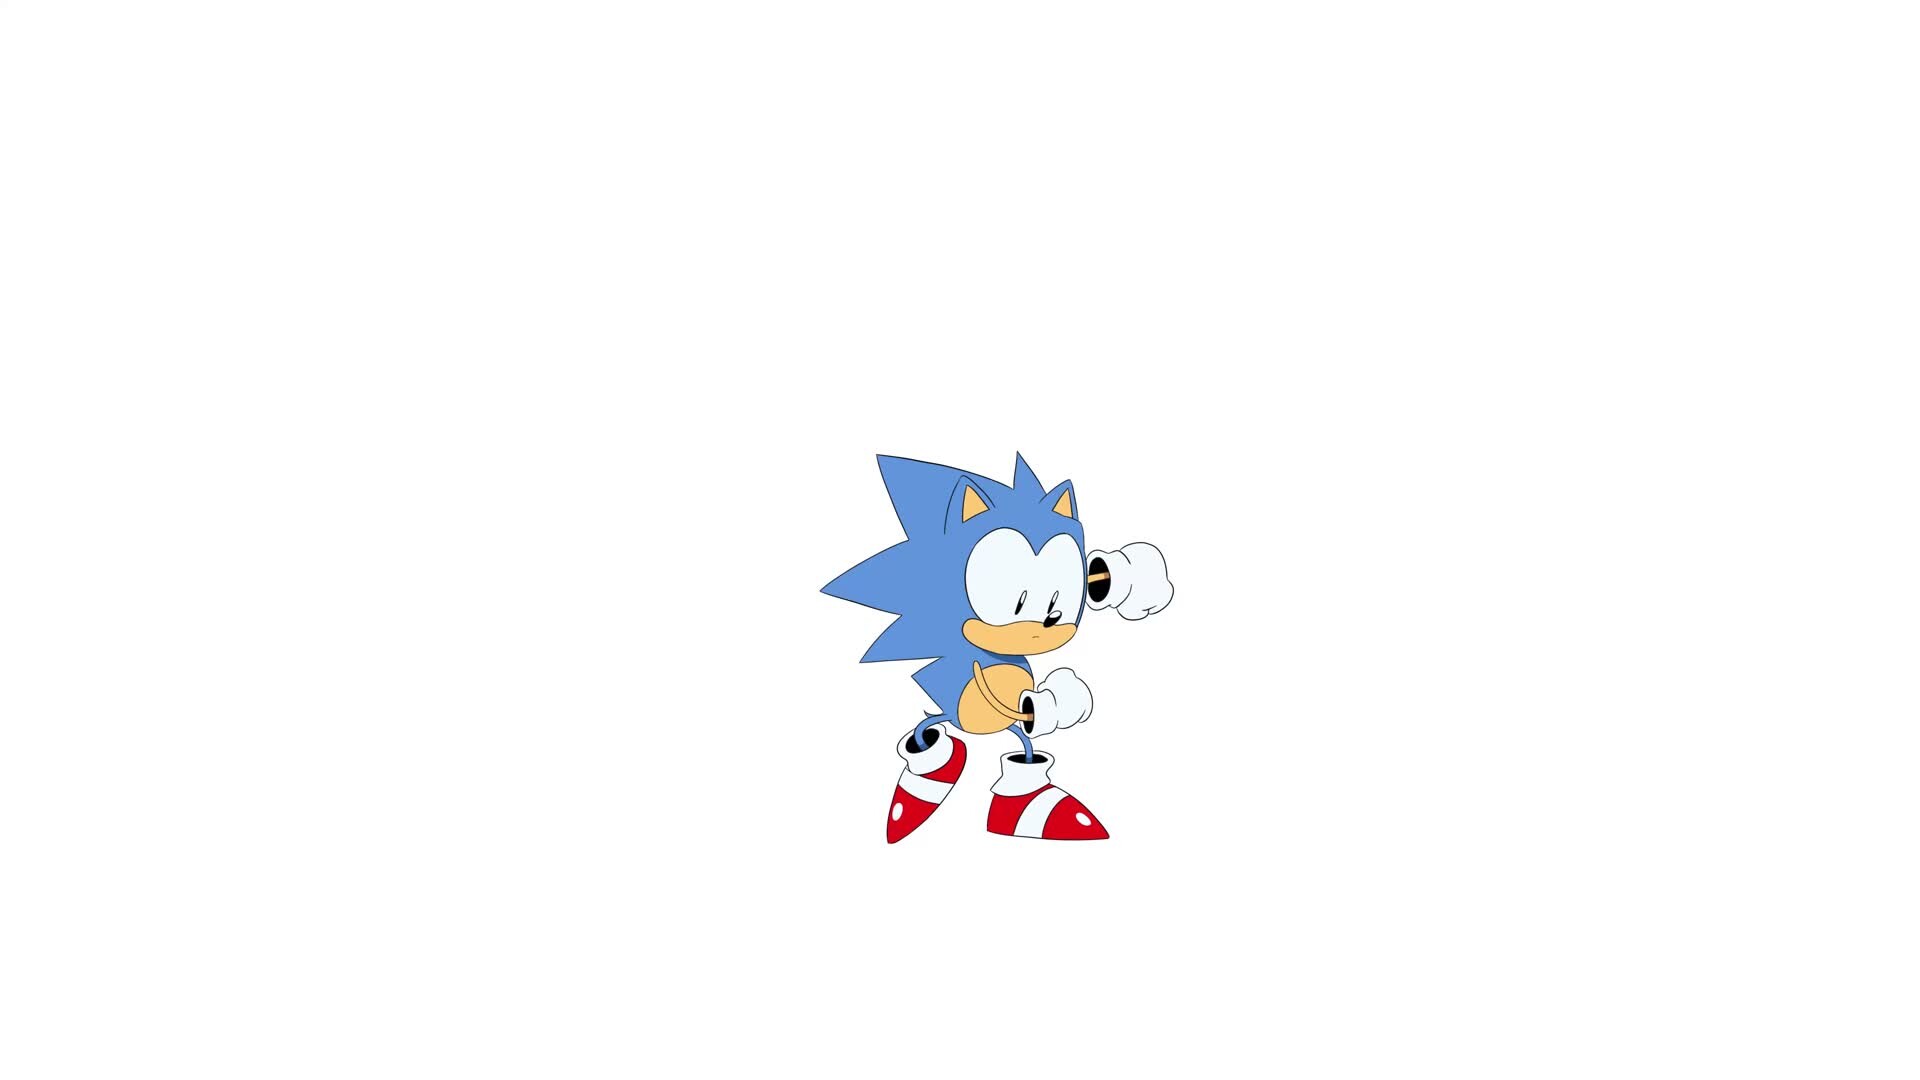 ArtStation - Sonic The Hedgehog sprite animations